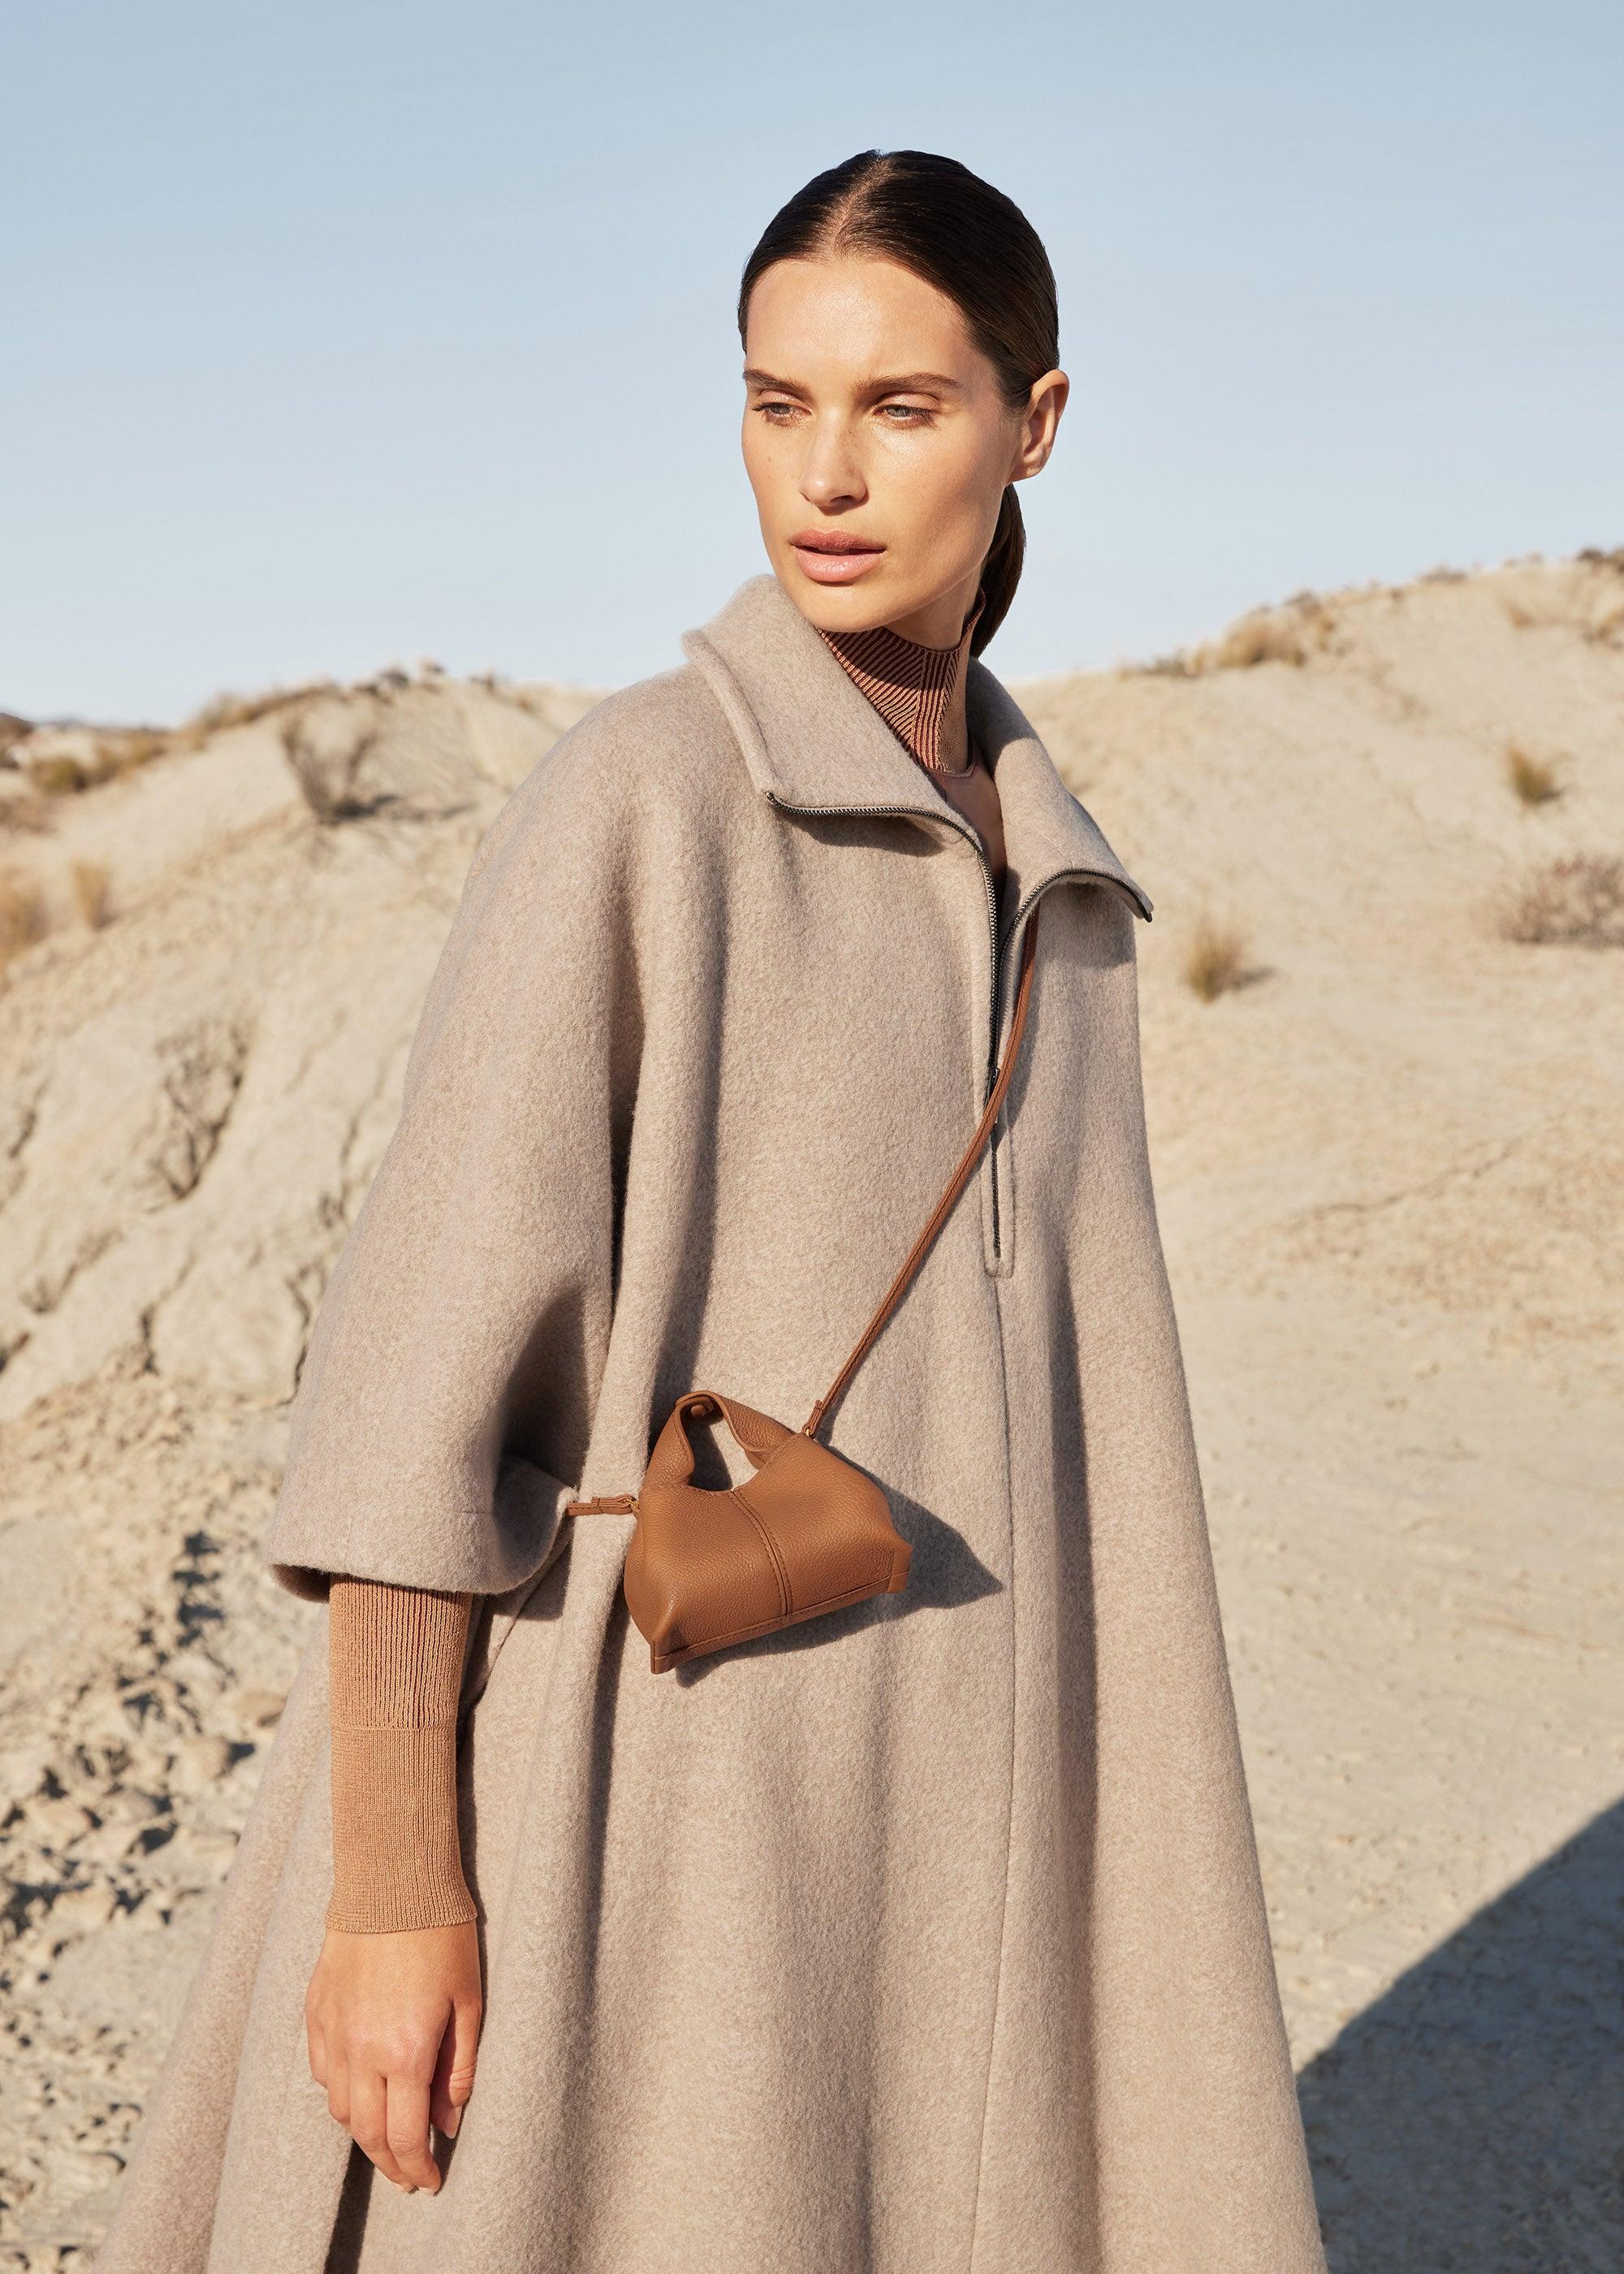 Polène Paris Number Nine Micro Bag - Camel Textured Leather in Natural